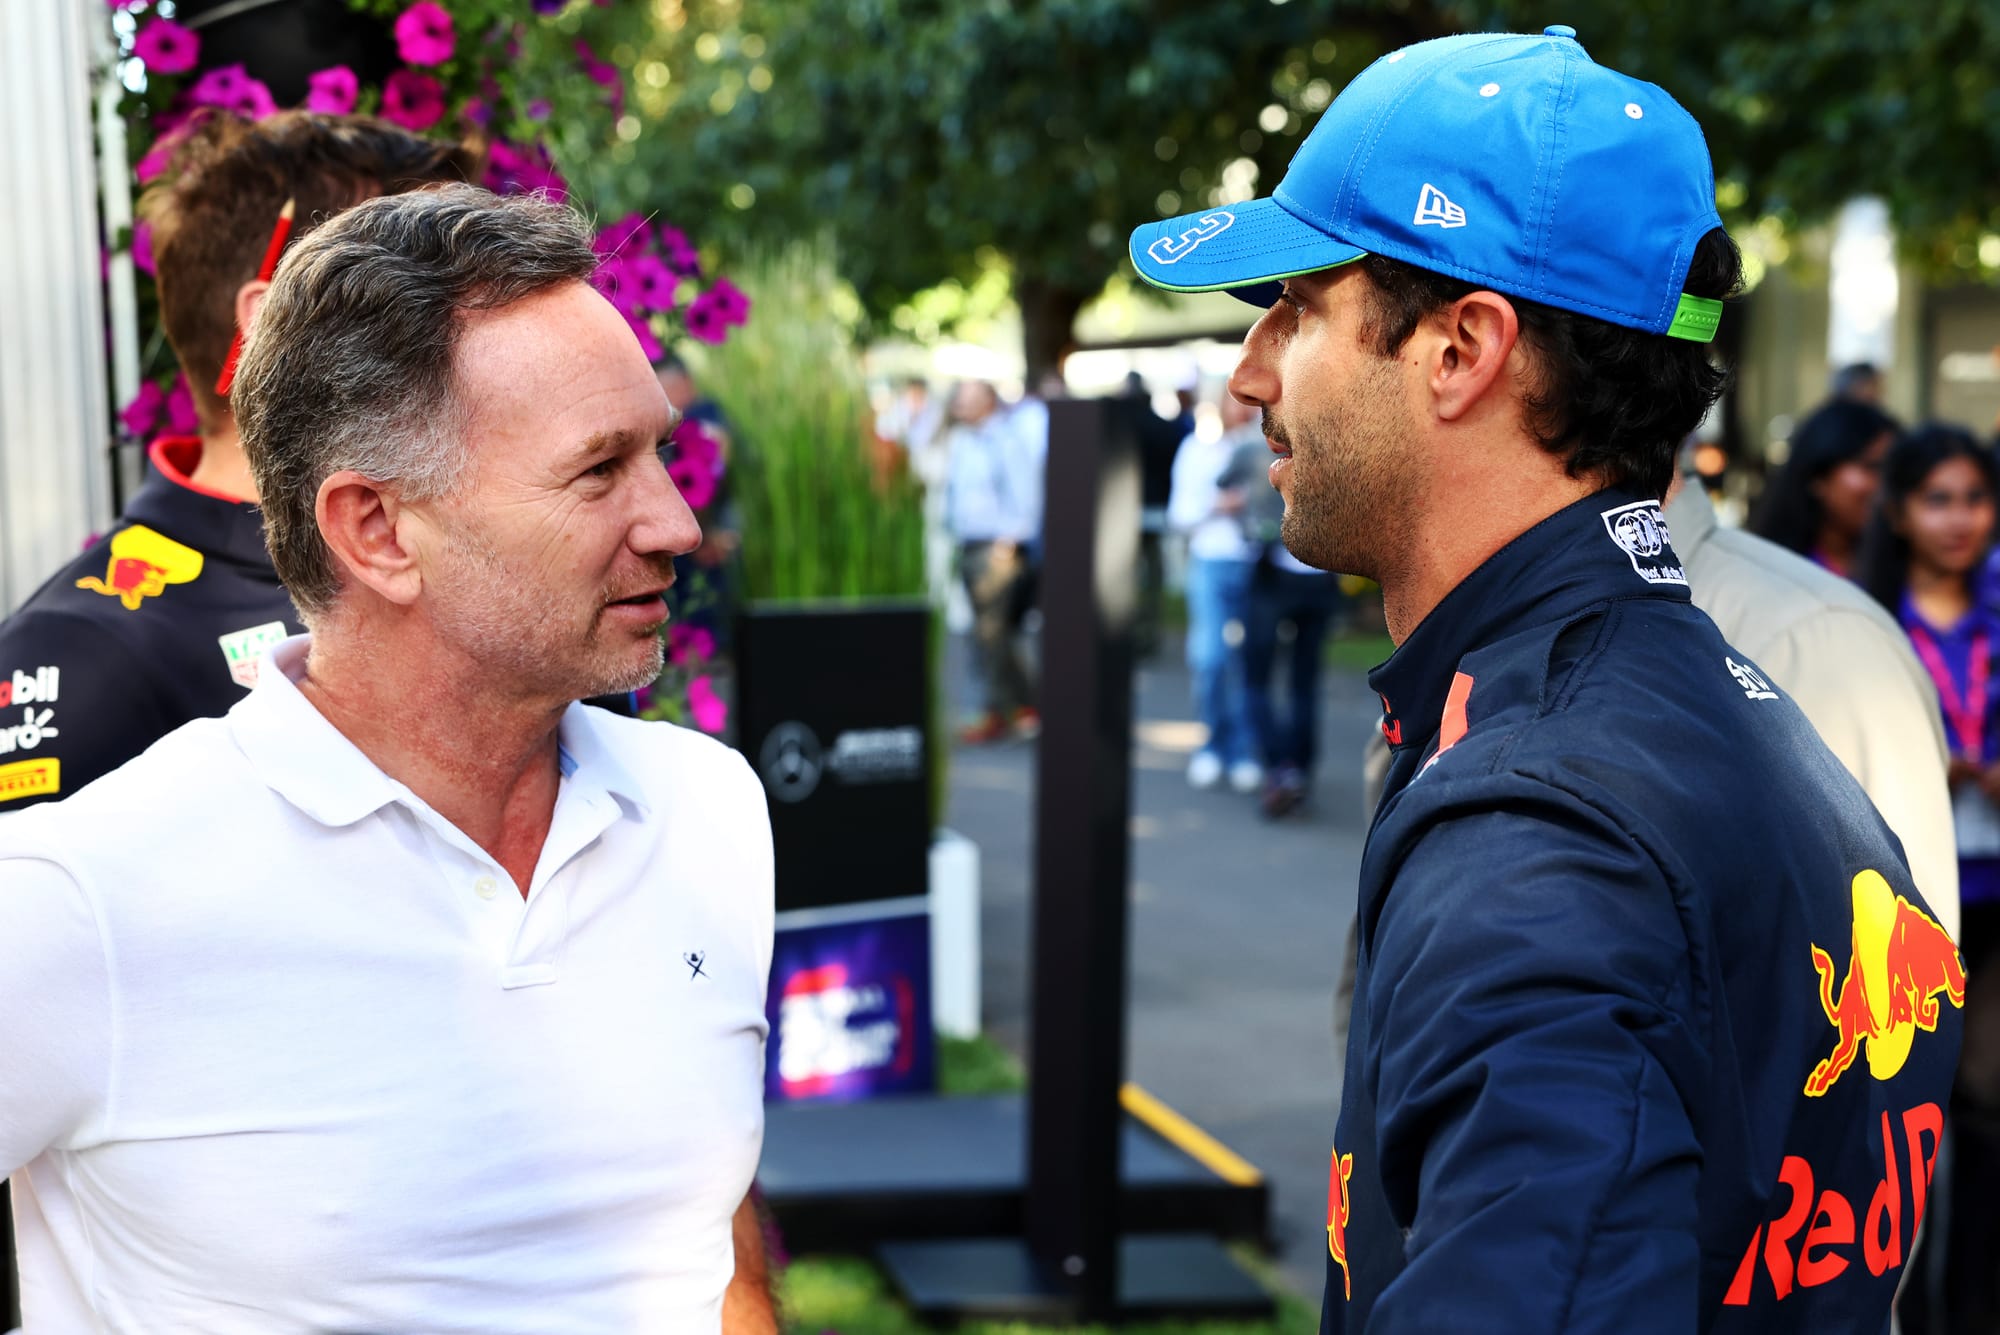 Christian Horner and Daniel Ricciardo in conversation